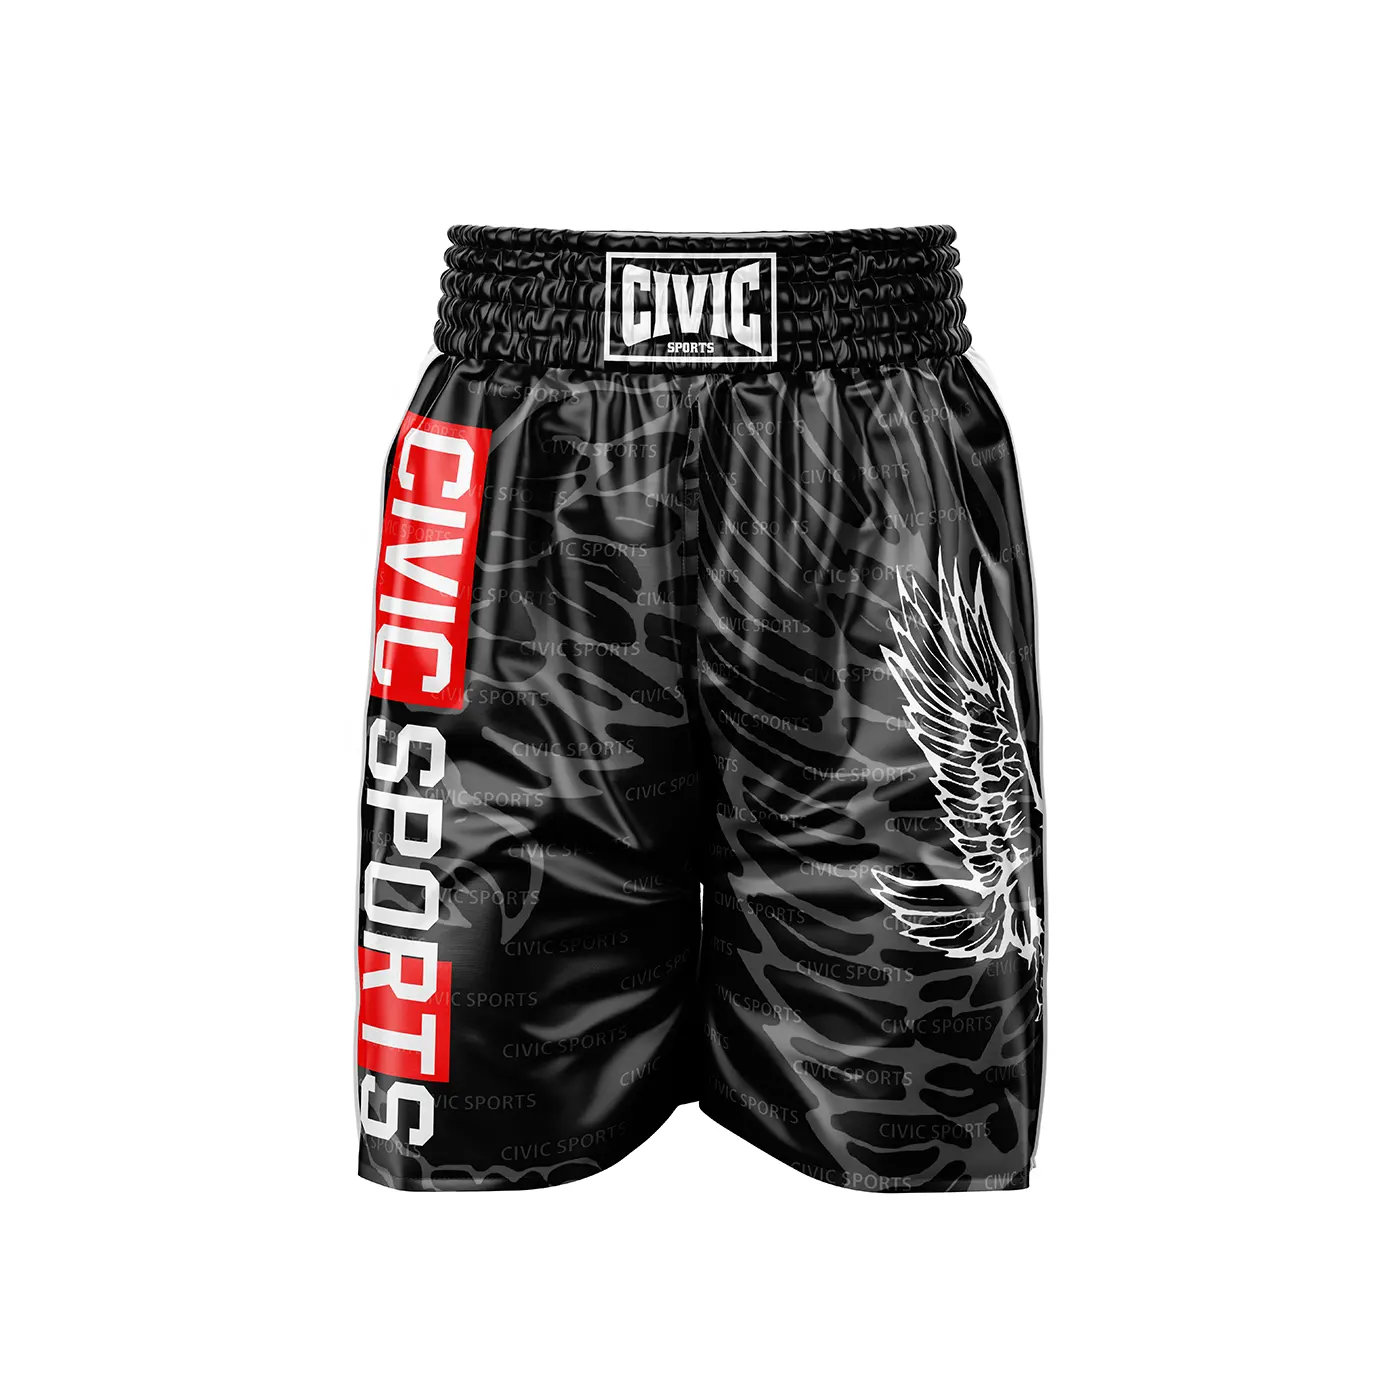 design your own men kick boxing shorts custom made muay thai shorts good quality product boxing short